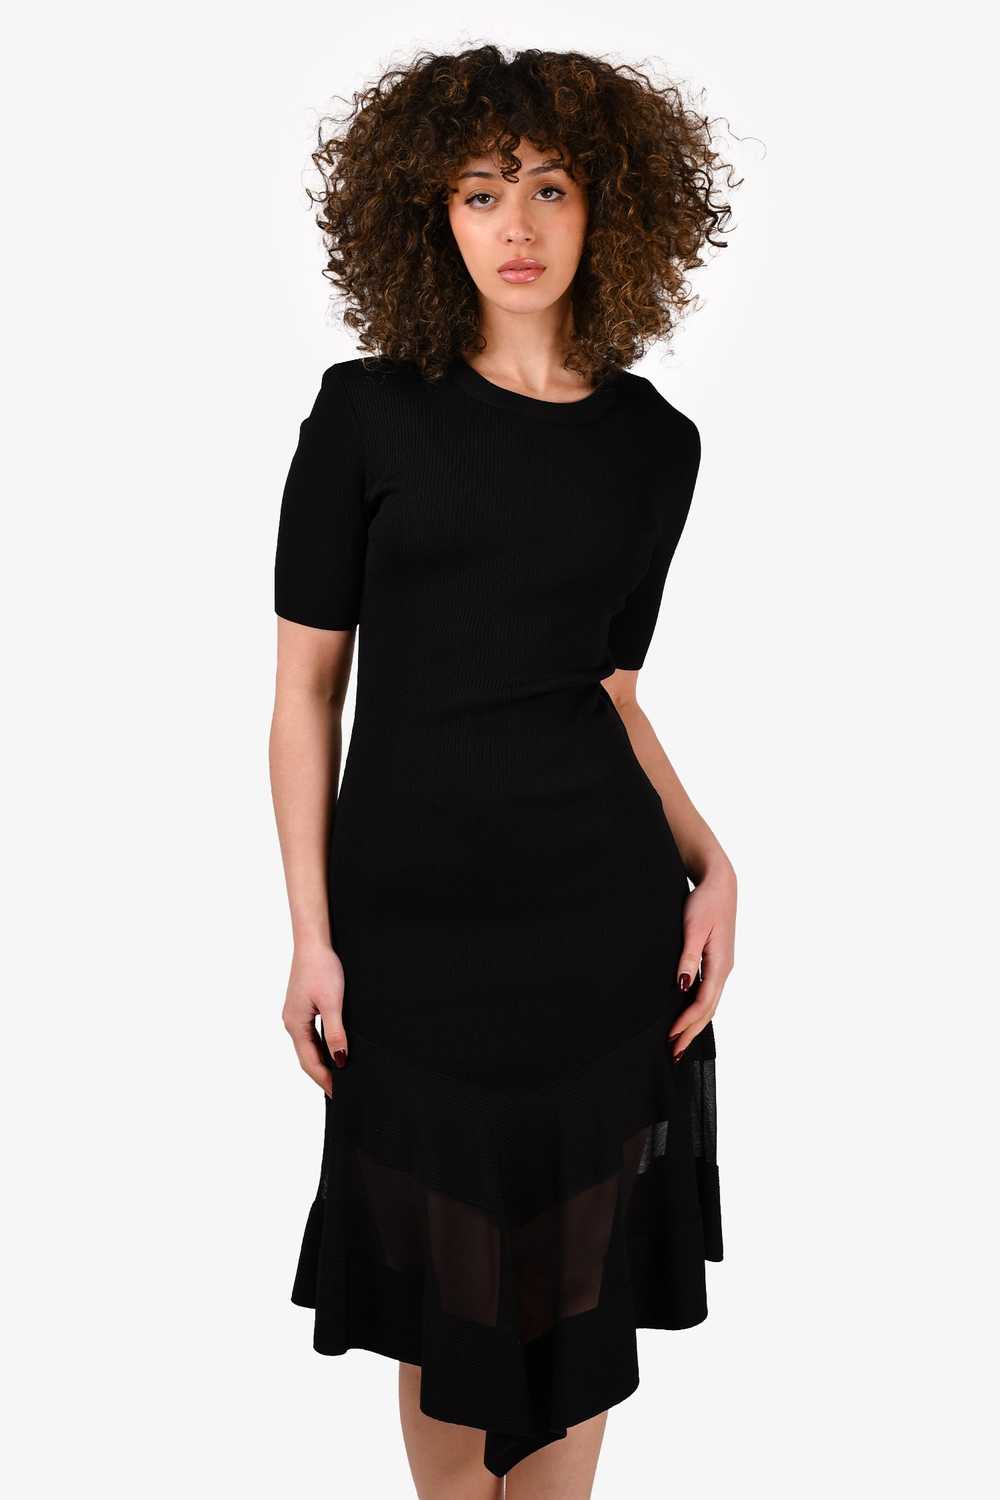 Givenchy Black Ribbed A Line Dress Size M - image 1